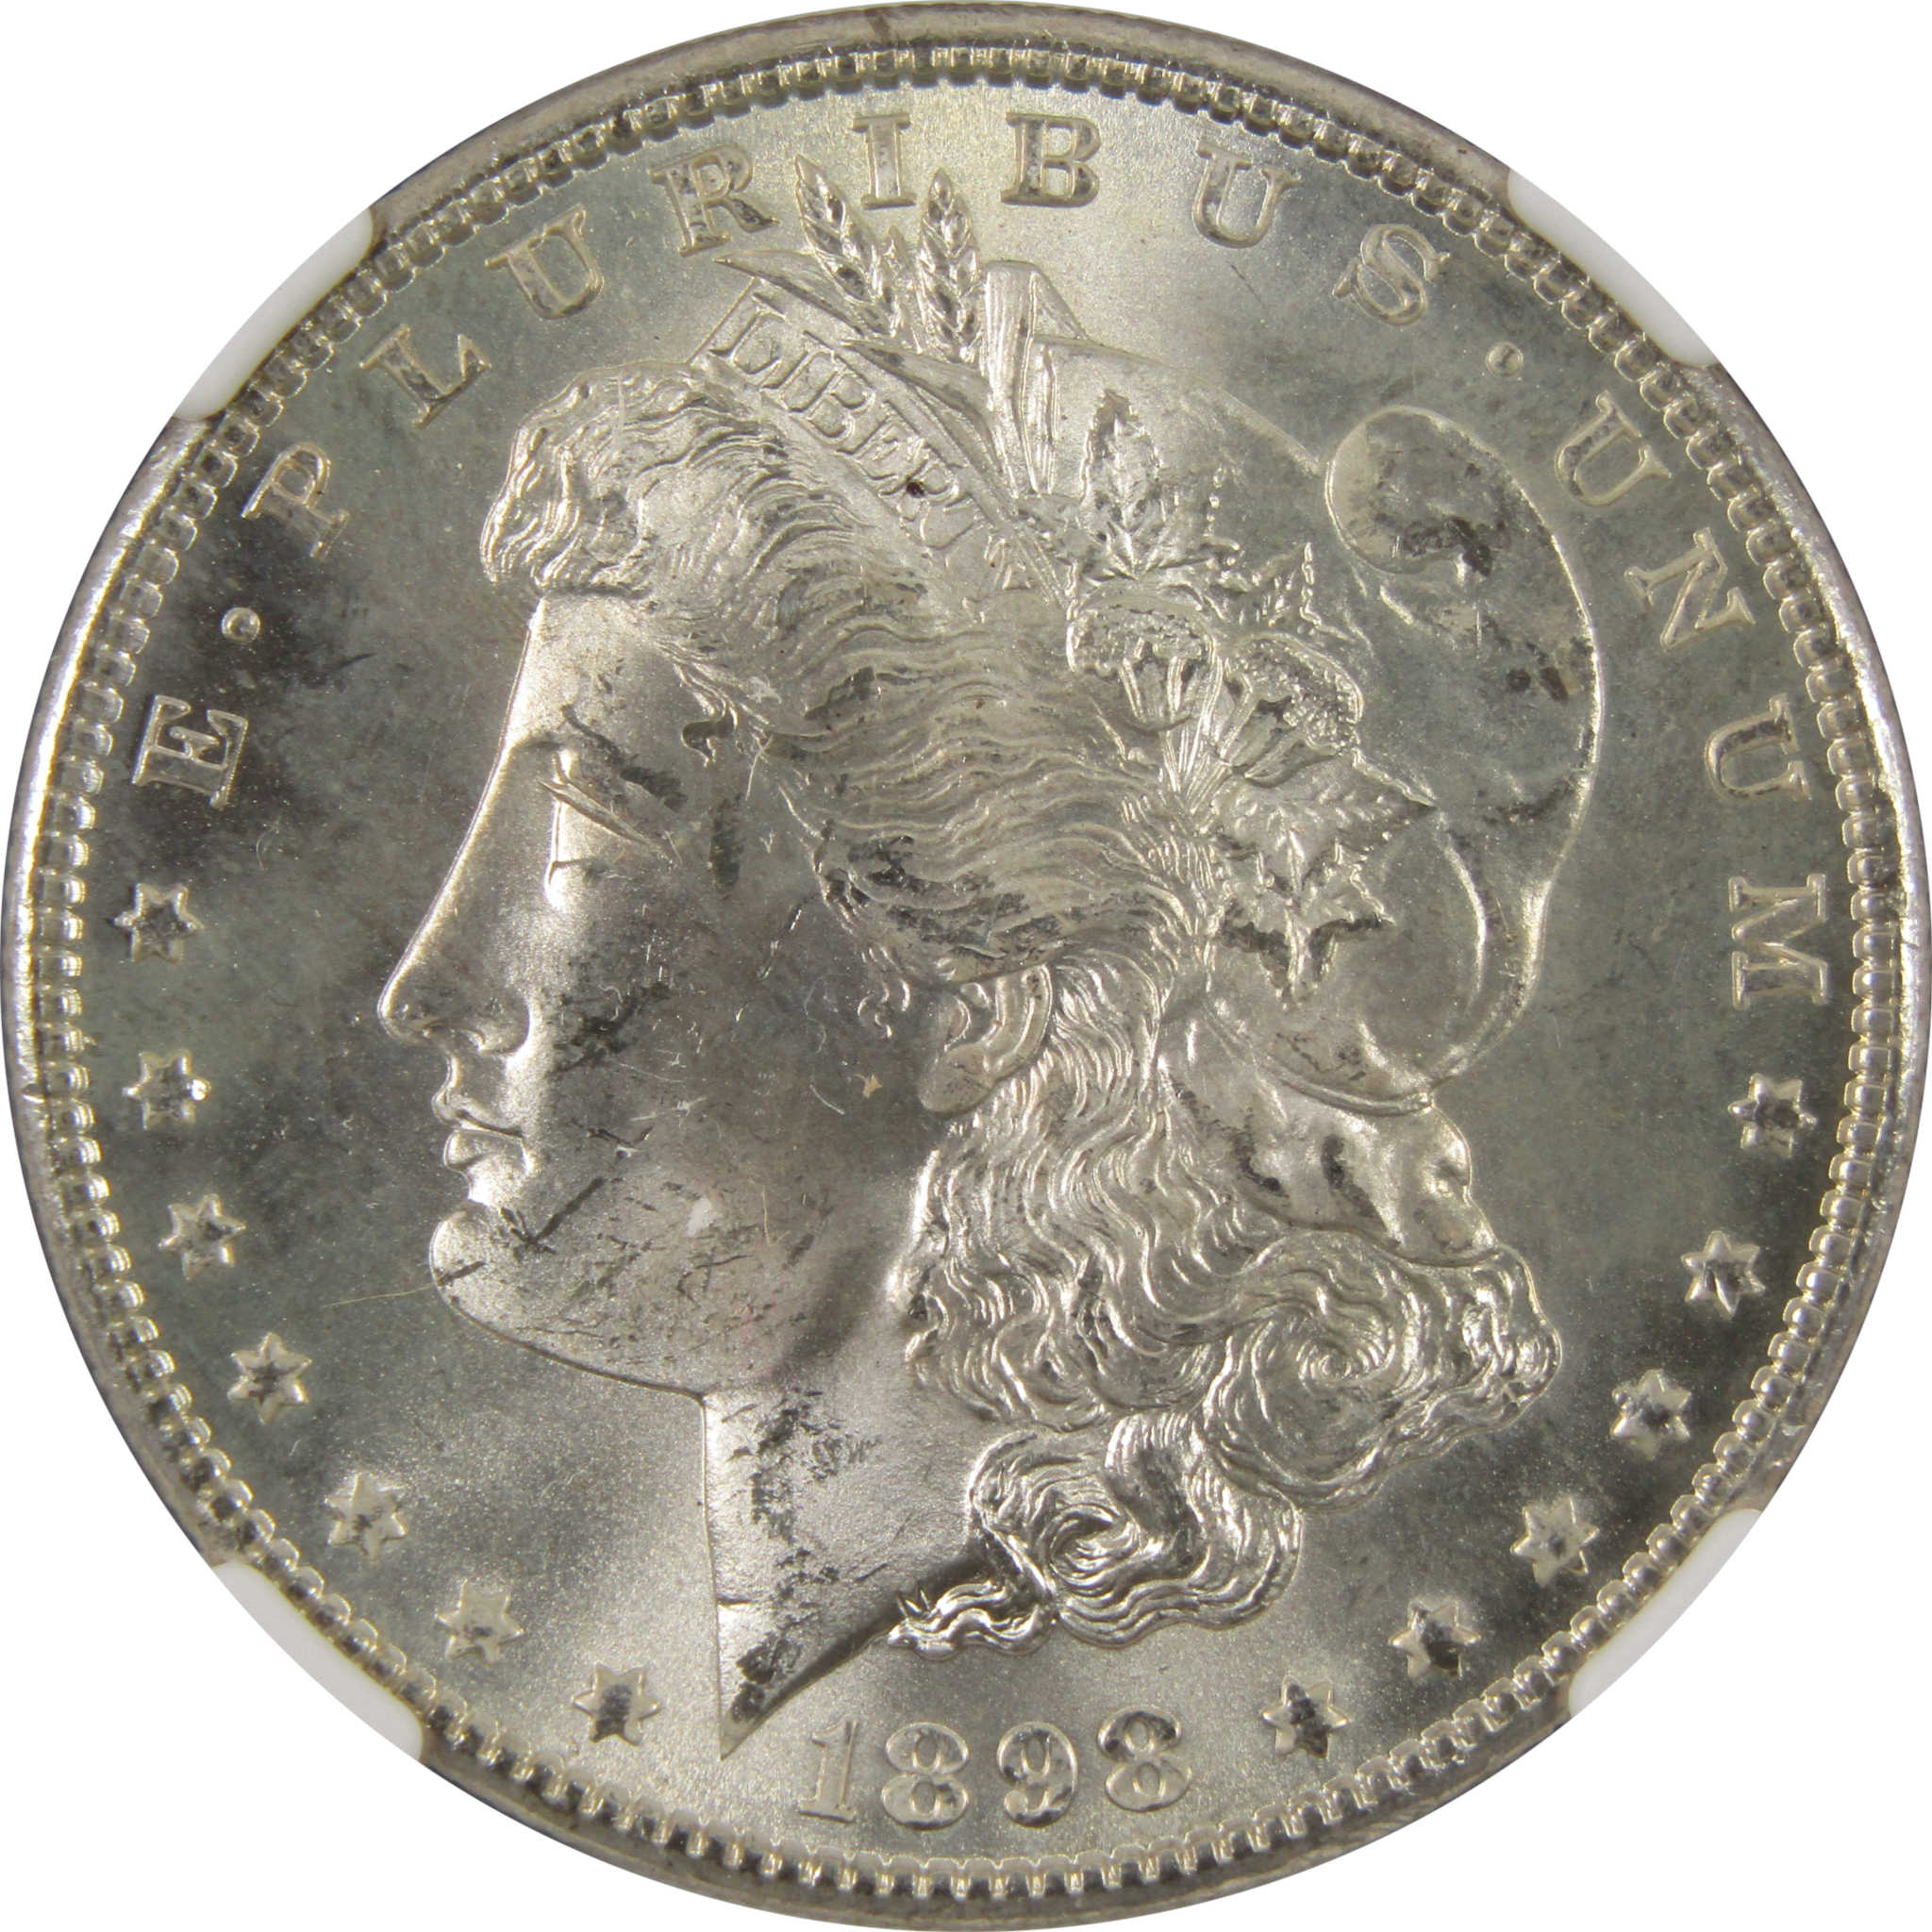 1898 O Morgan Dollar MS 65 NGC 90% Silver Uncirculated Coin SKU:I6137 - Morgan coin - Morgan silver dollar - Morgan silver dollar for sale - Profile Coins &amp; Collectibles